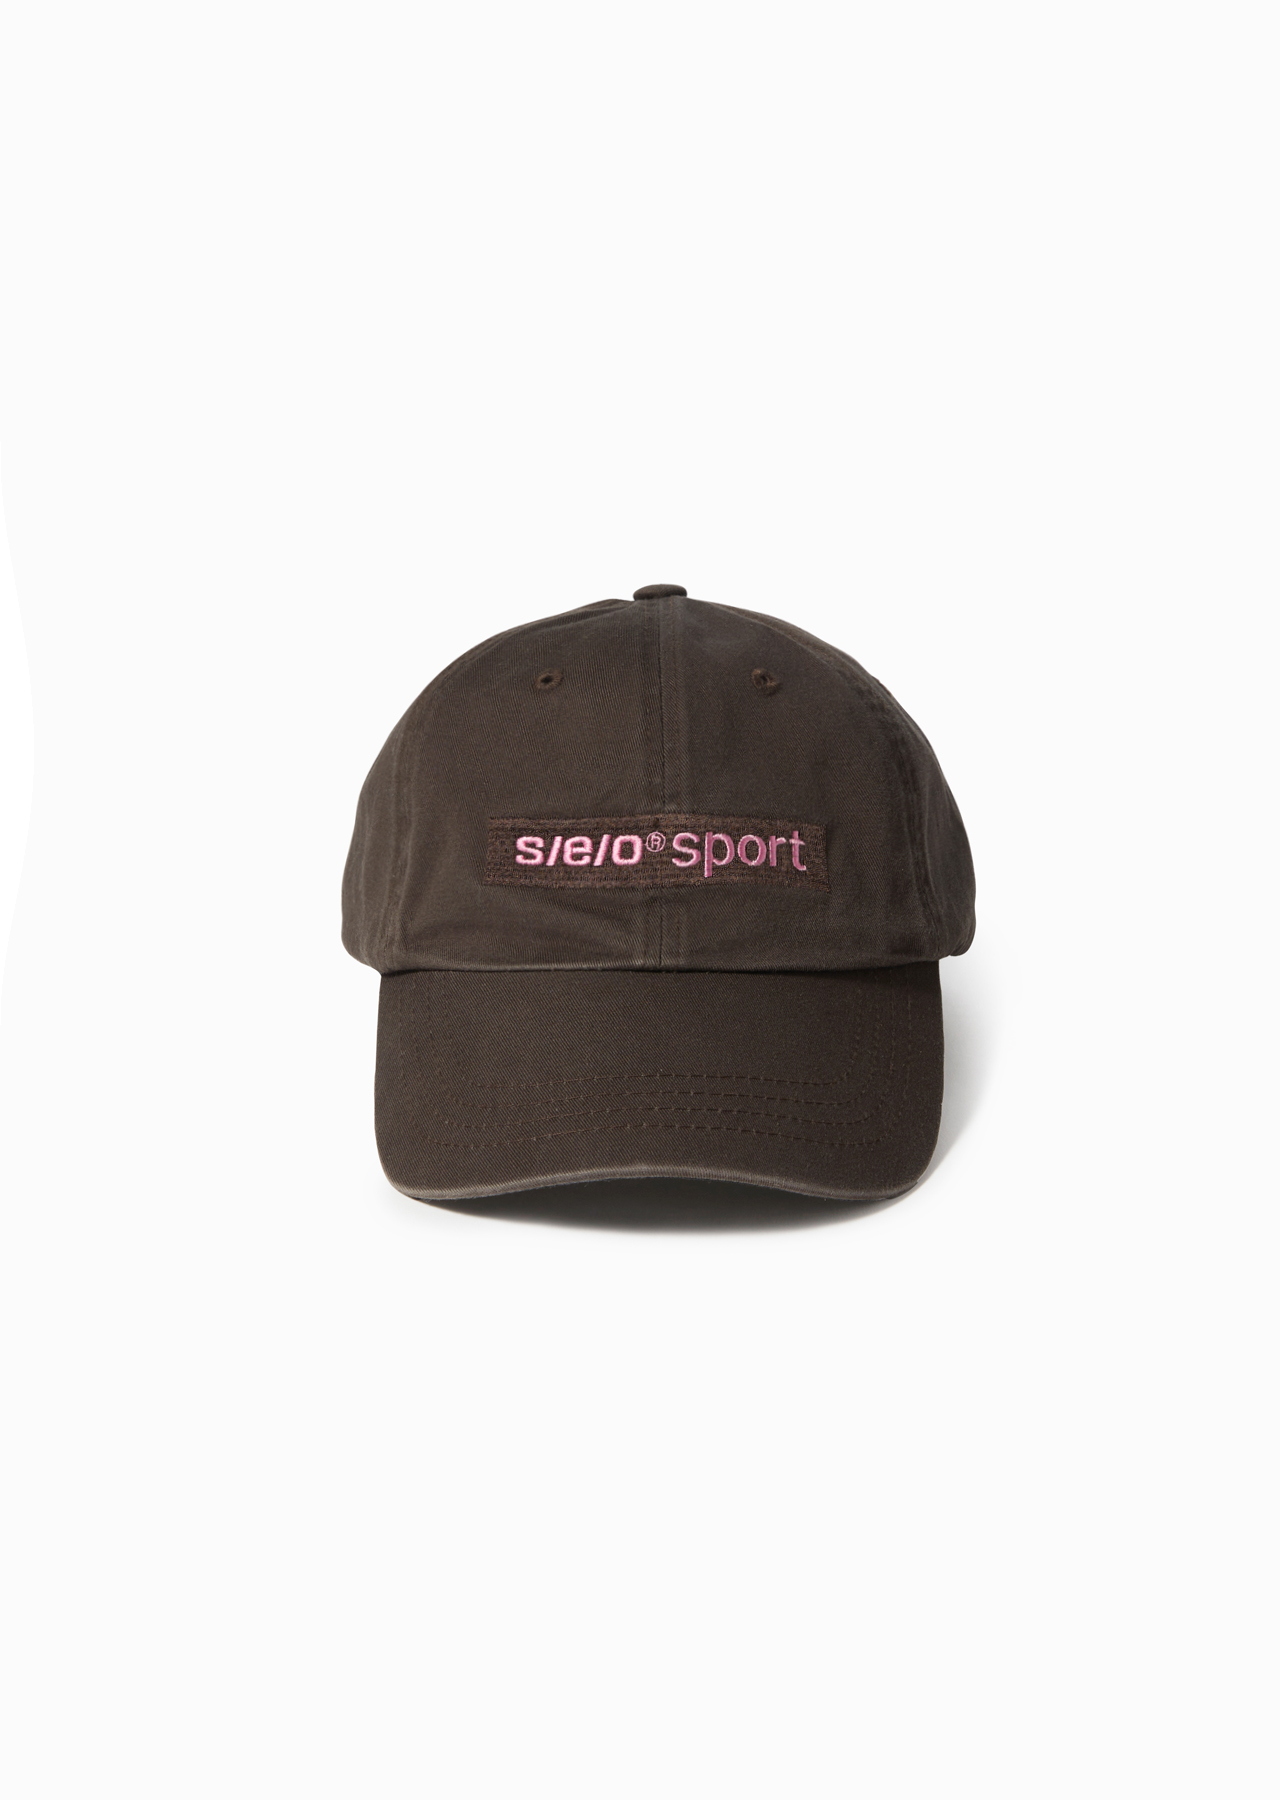 s/e/o SPORT CAP BROWN